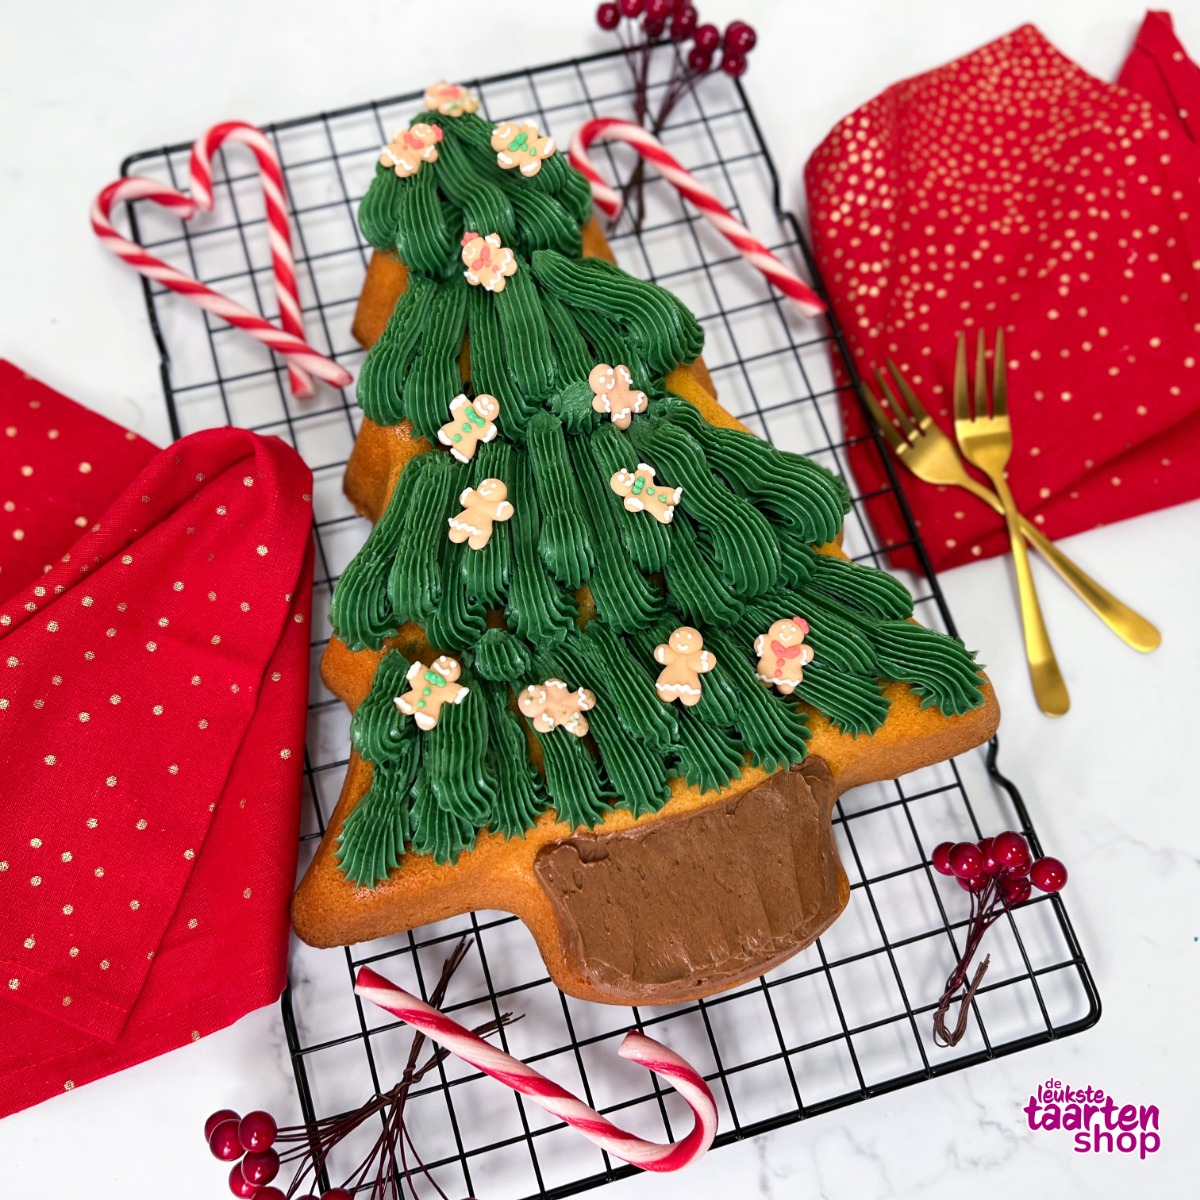 Wilton Mini Christmas Cake Pan - Gingerbread Man & Christmas Tree - 6 Molds  Non-stick